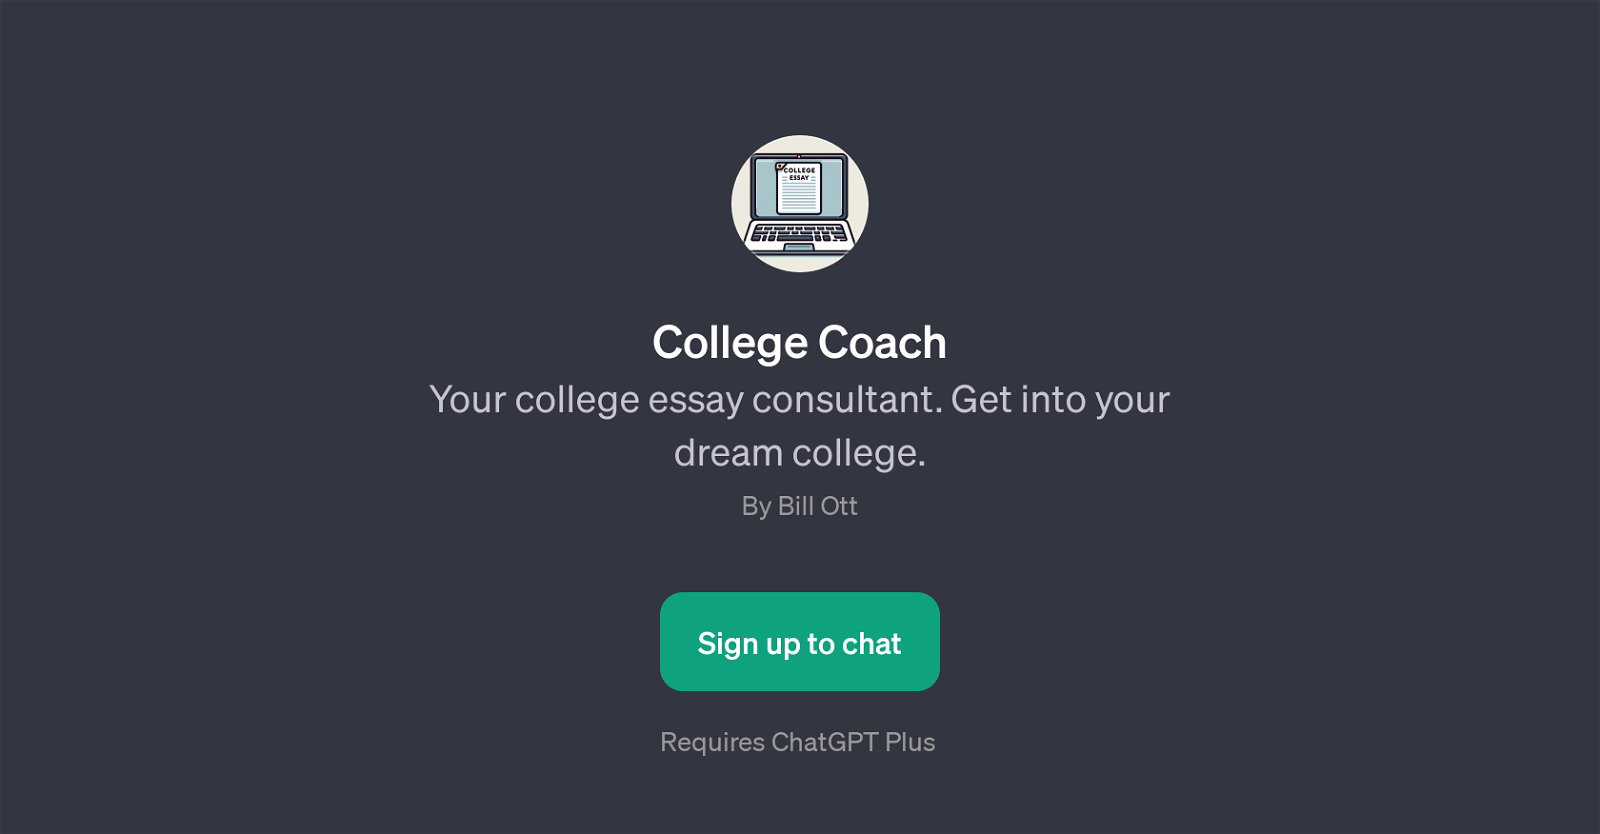 College Coach website